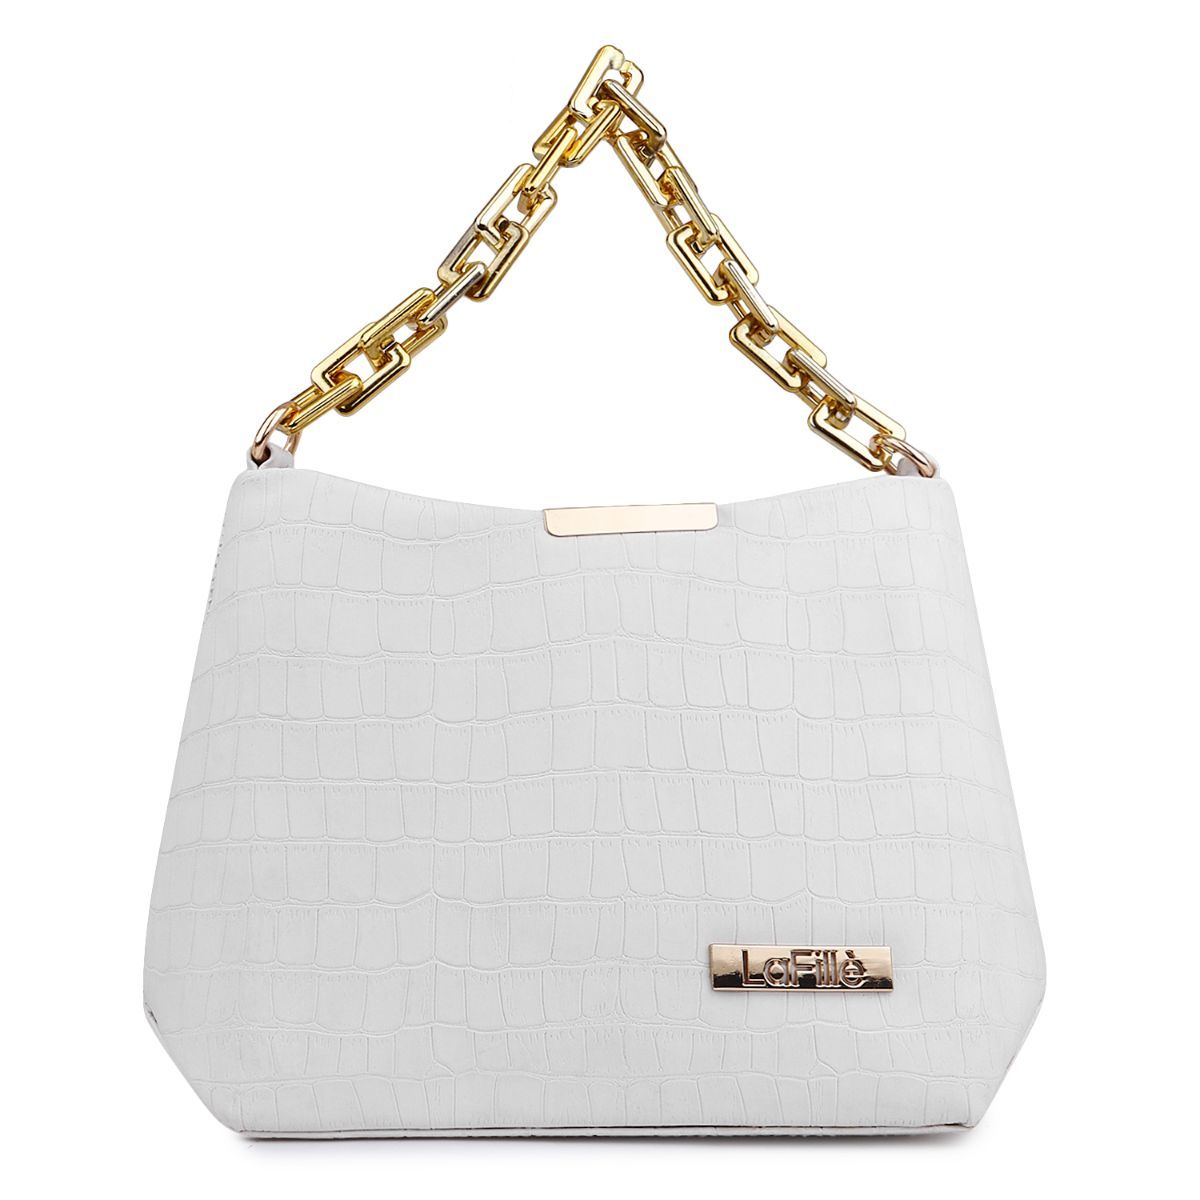 Buy LaFille Black Women Handbag Set Of 5 Bags Online